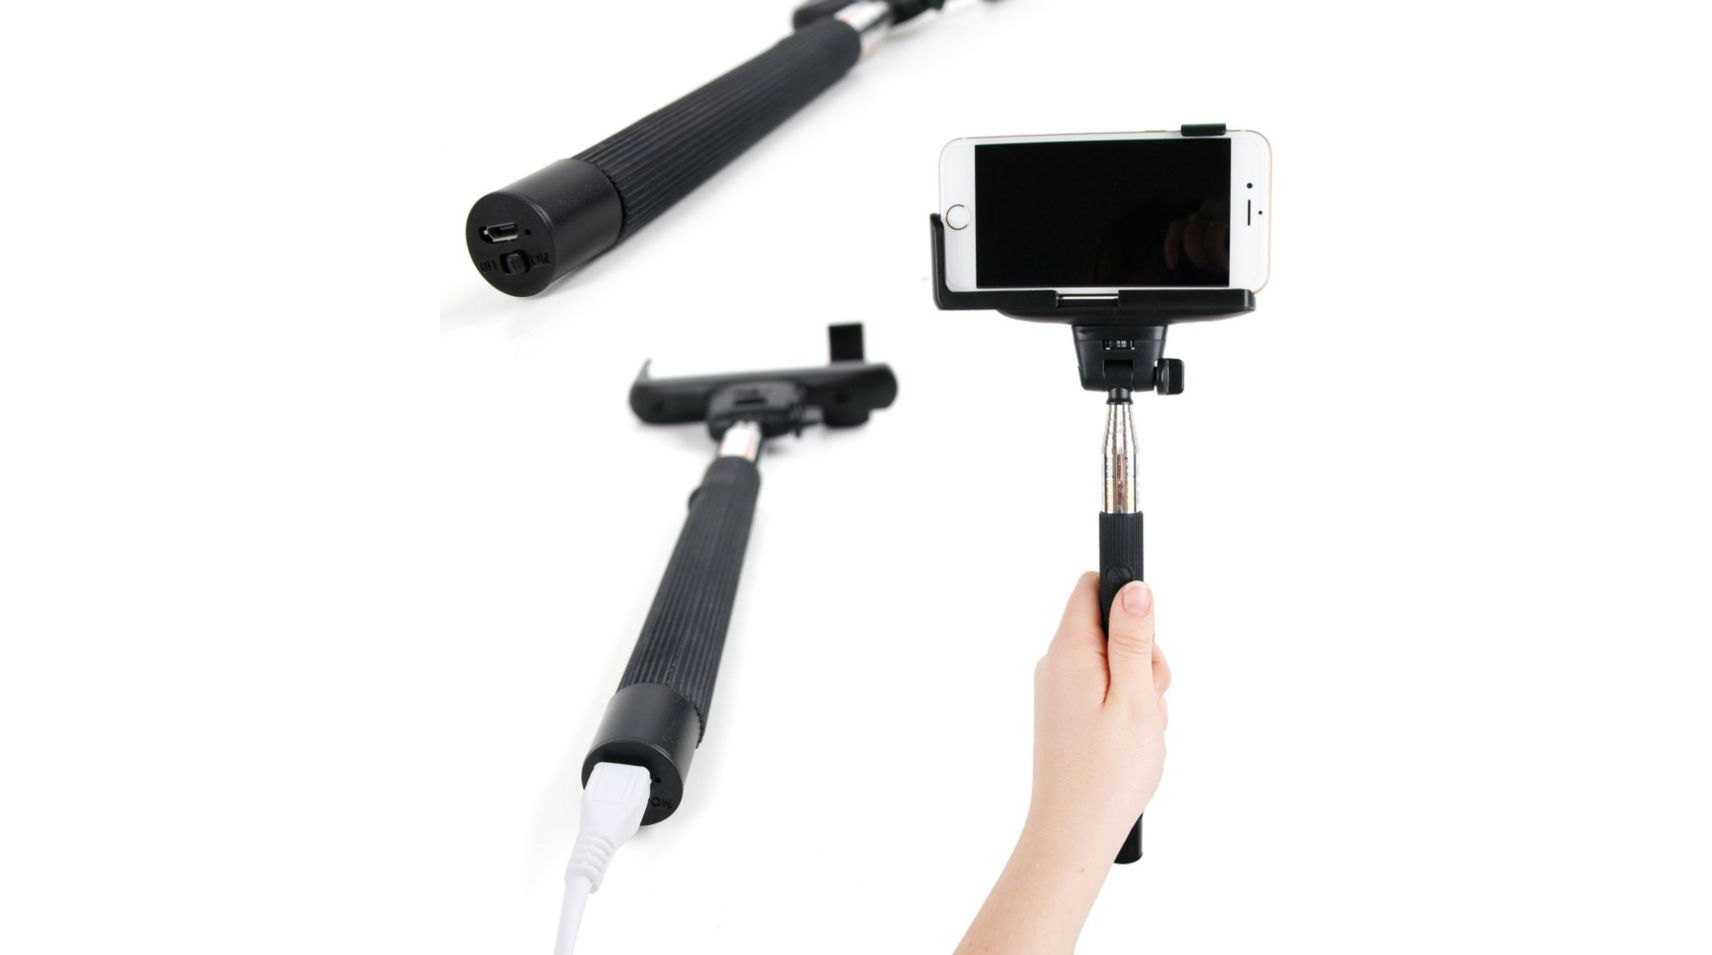 Cadeau perche selfie bluetooth téléphone - Cadeaux Et Hightech